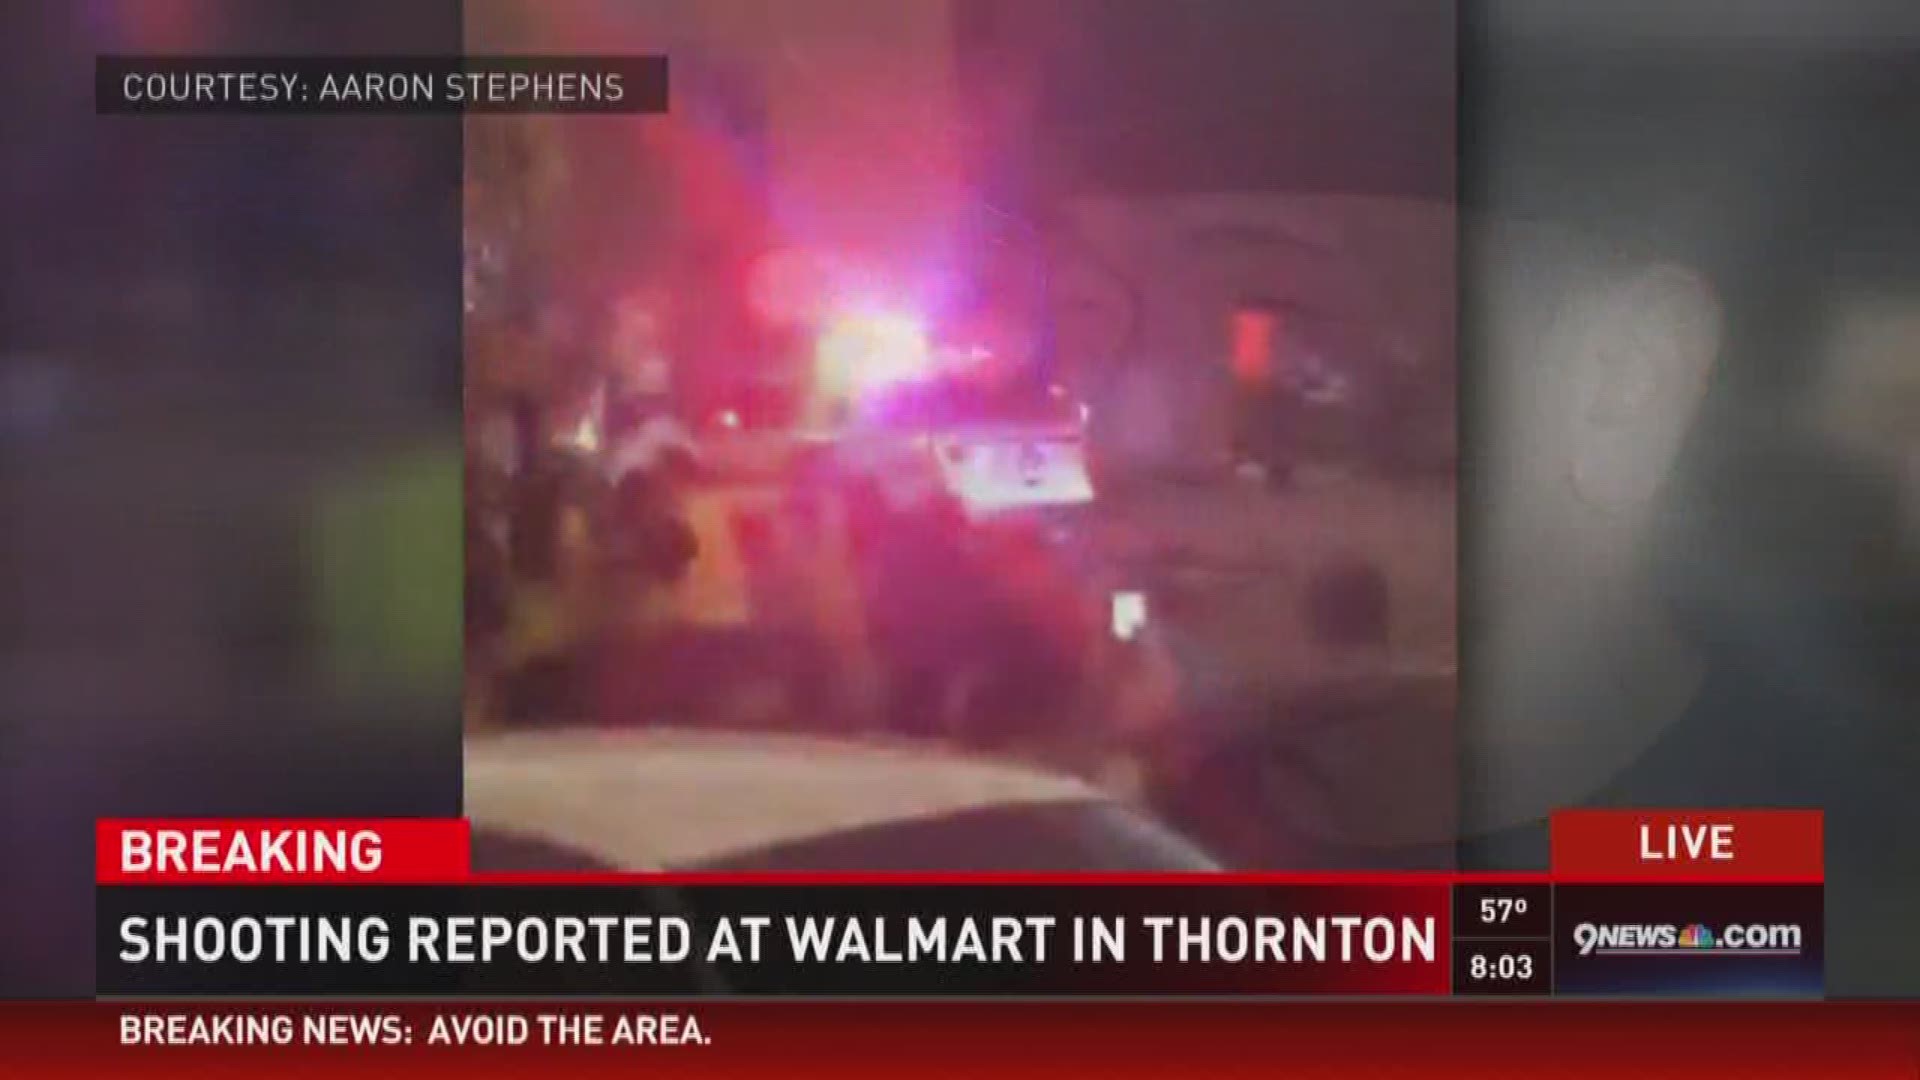 Aaron Stephens was at the self checkout when he heard gunshots inside the Walmart.